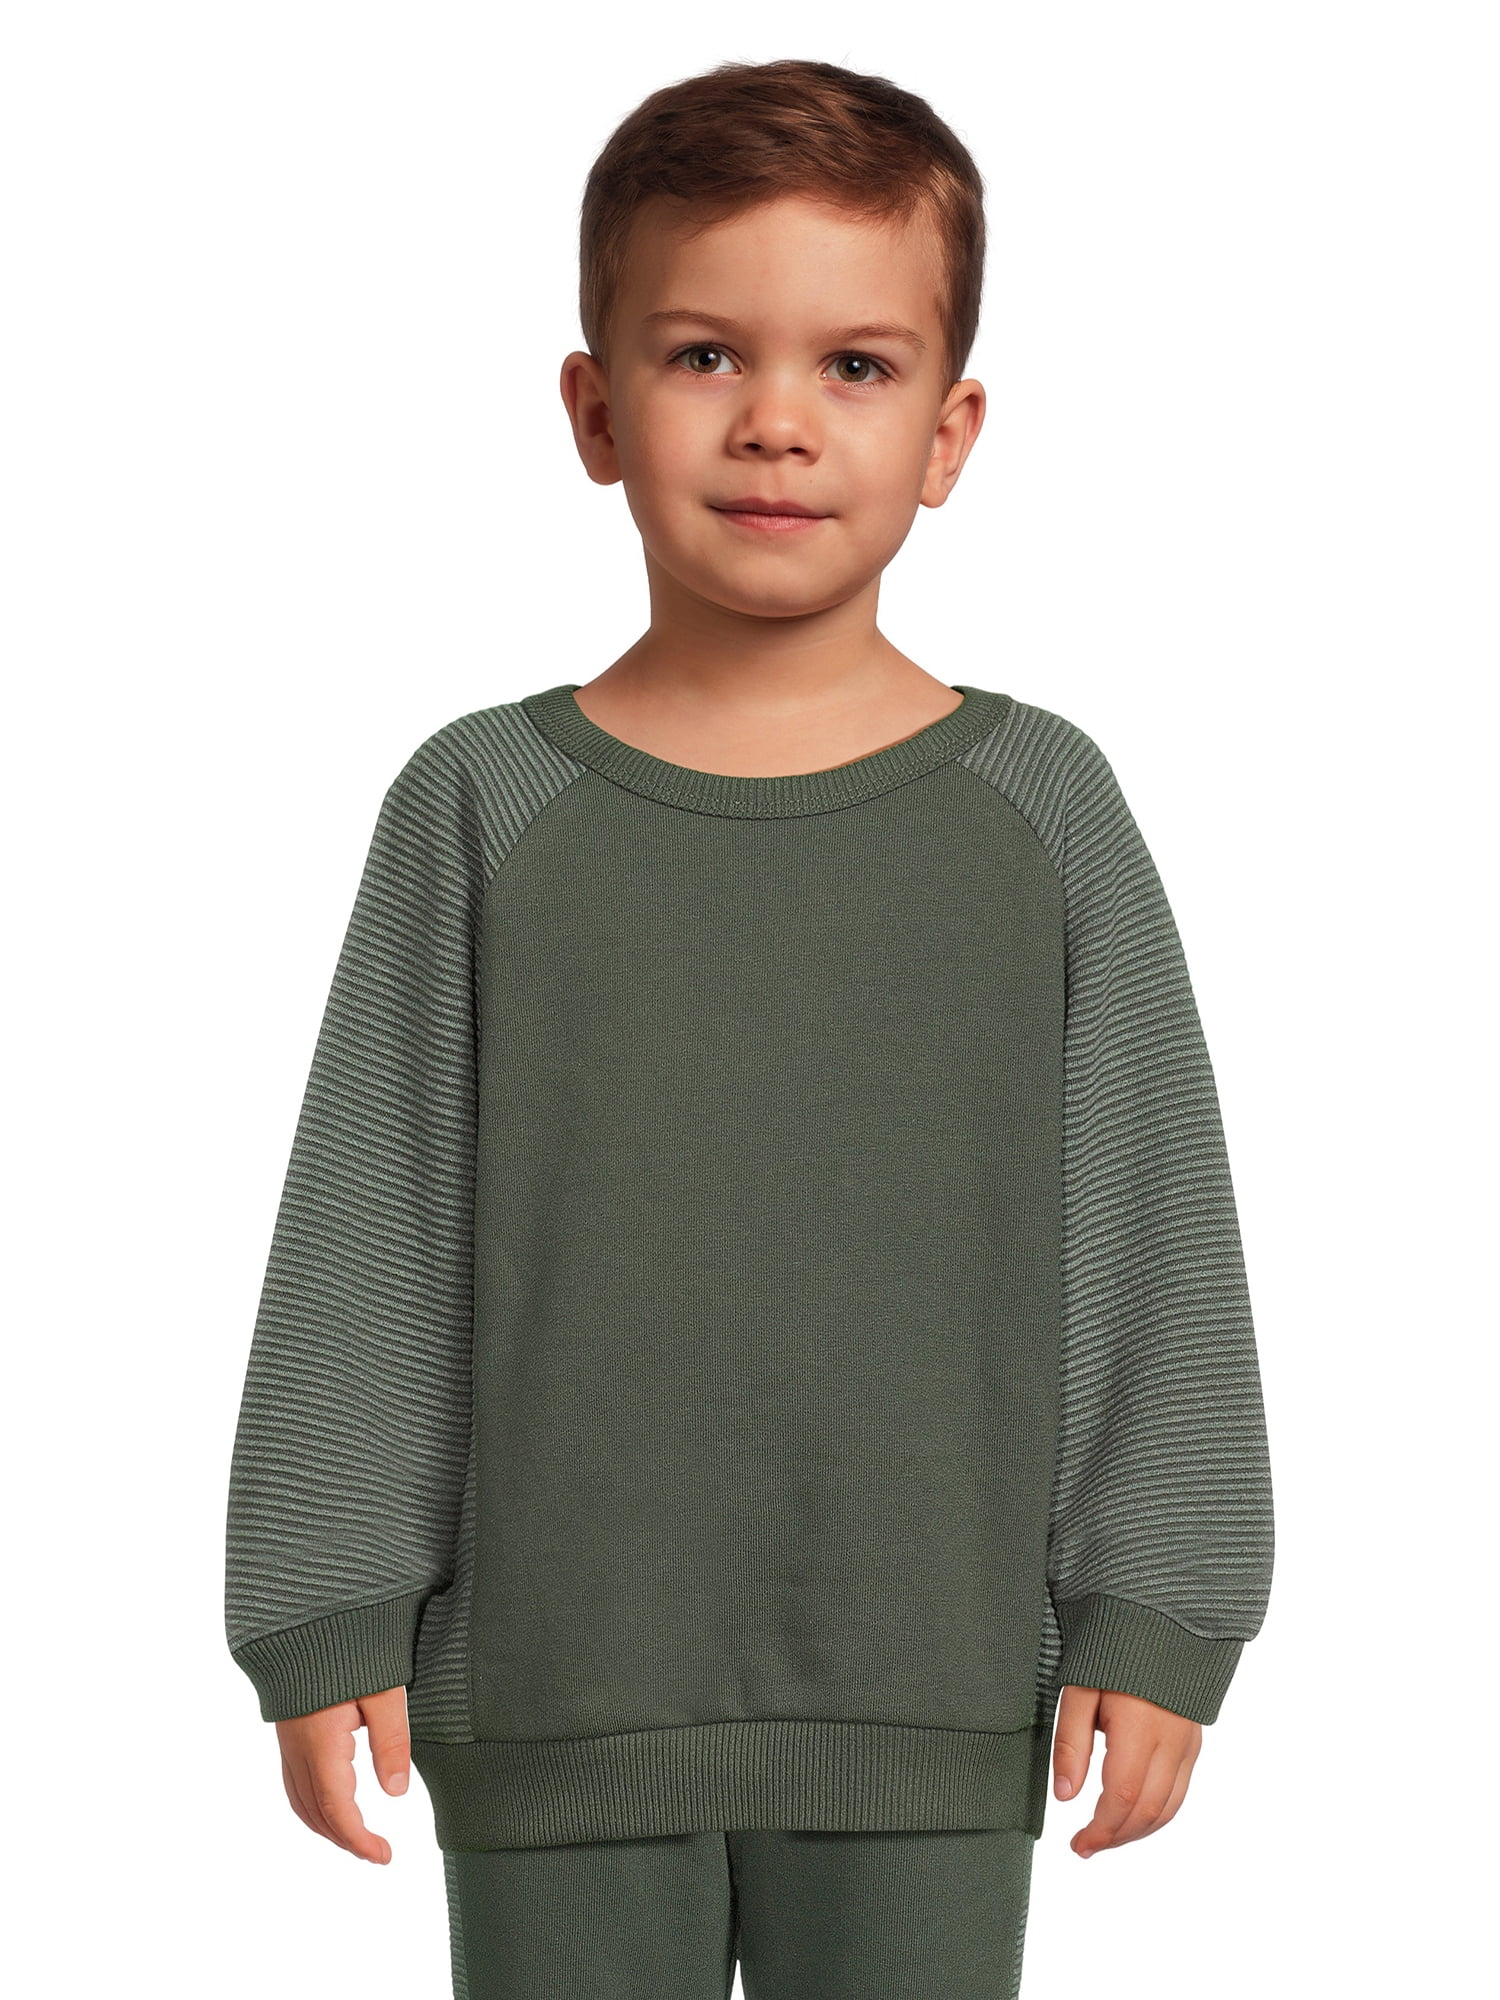 easy-peasy Toddler Boy Long Sleeve Crewneck Sweatshirt, Sizes 12 Months ...